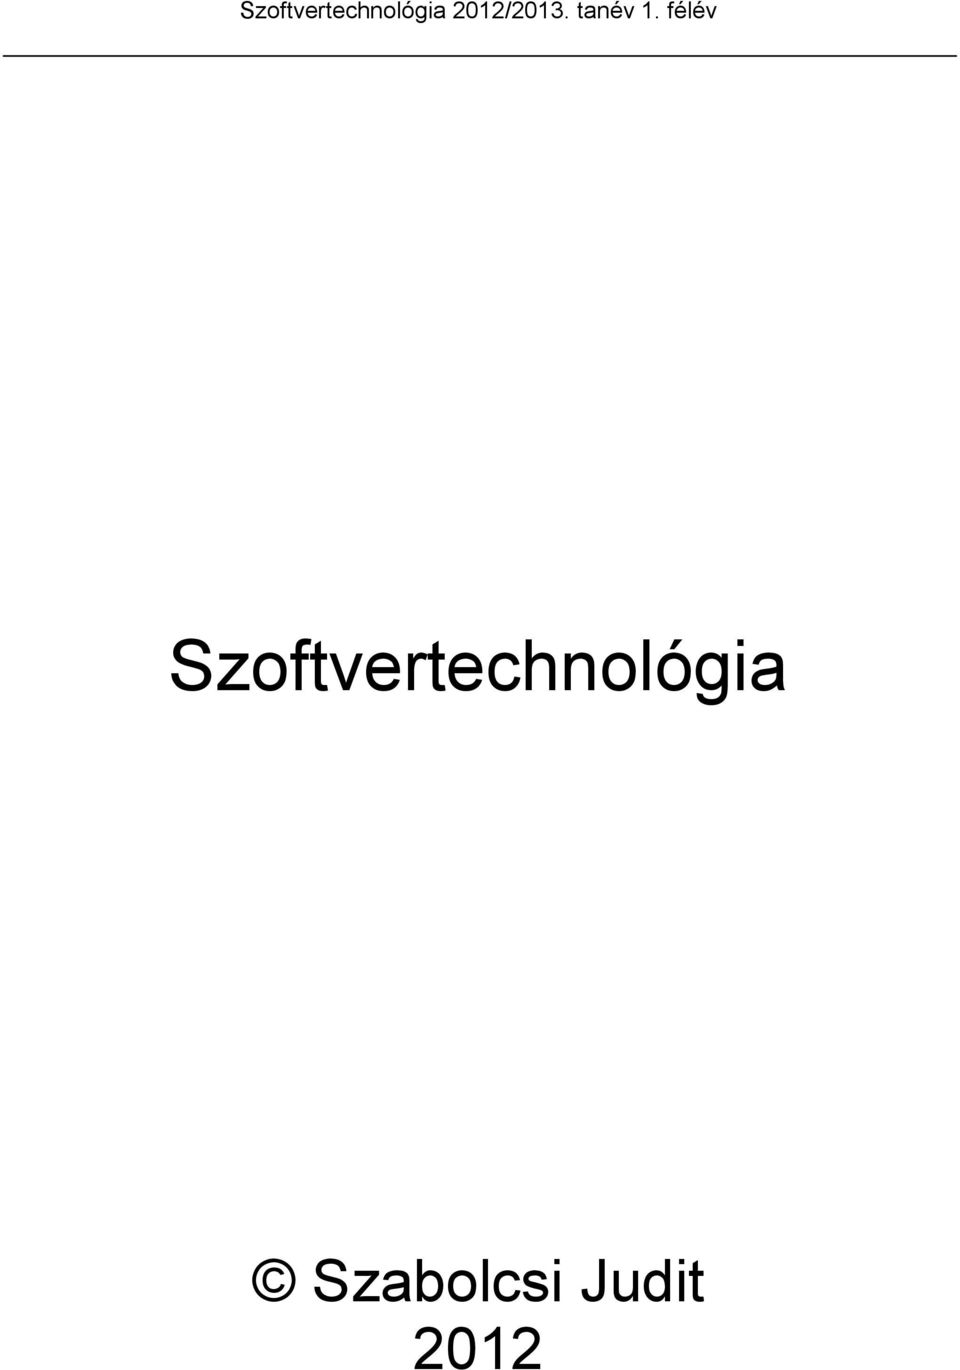 Szoftvertechnológia 2012/2013. tanév 1. félév. Szoftvertechnológia - PDF  Free Download